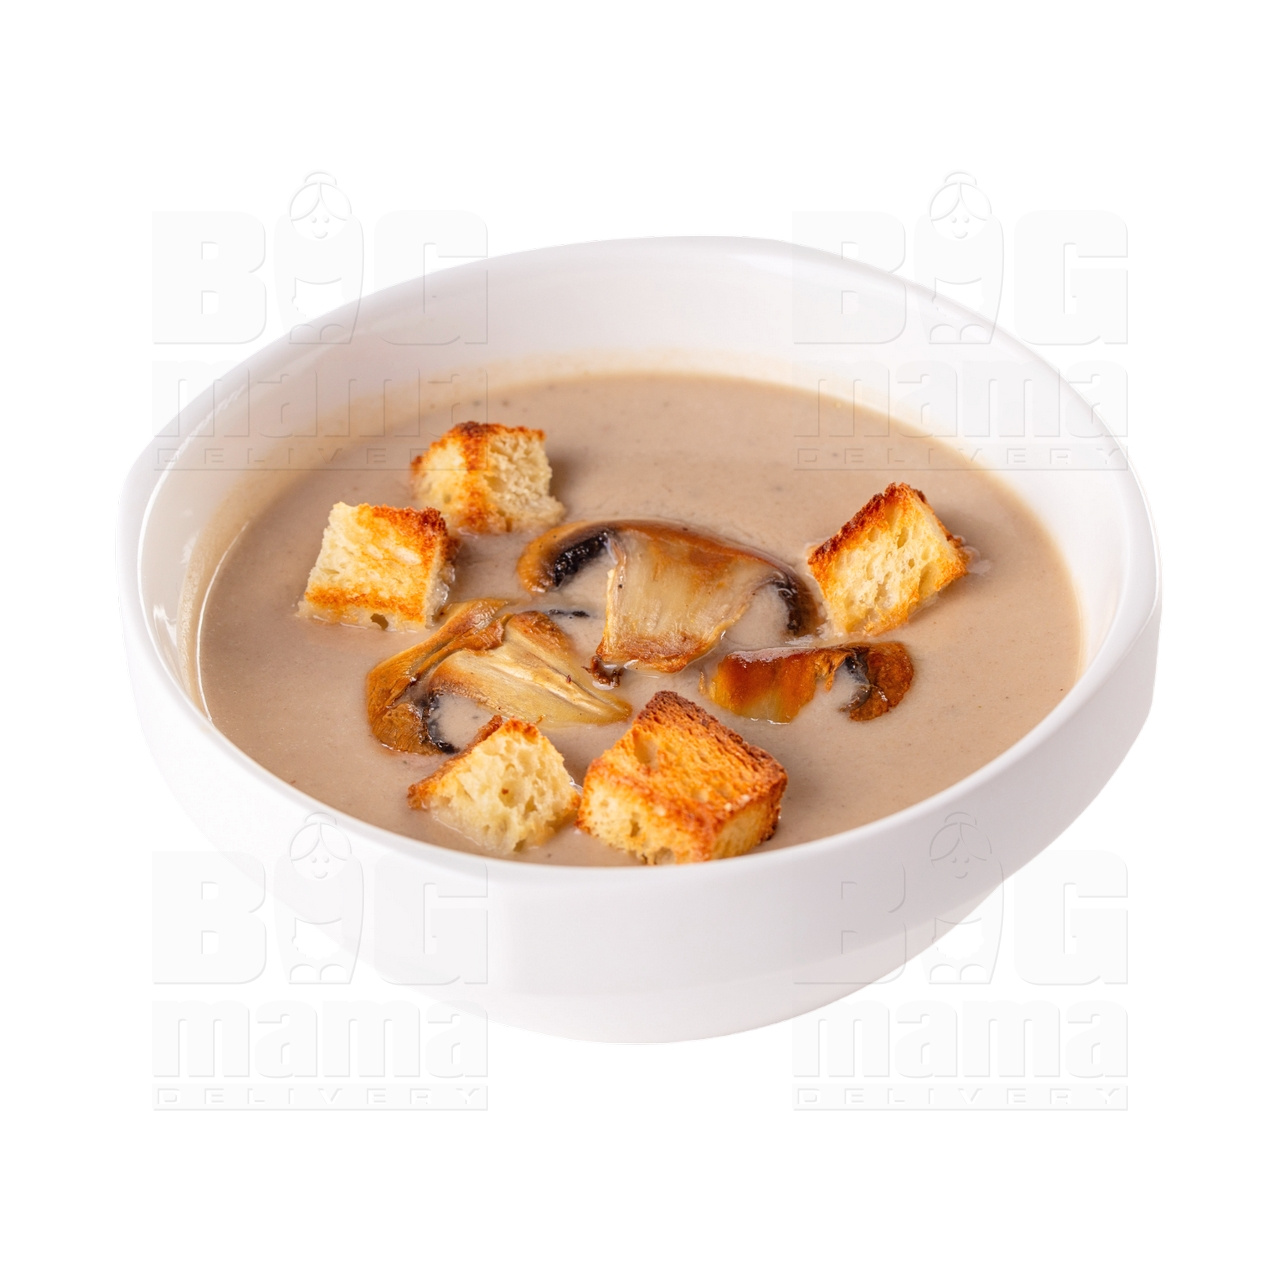 Product #264 image - Mushroom cream soup